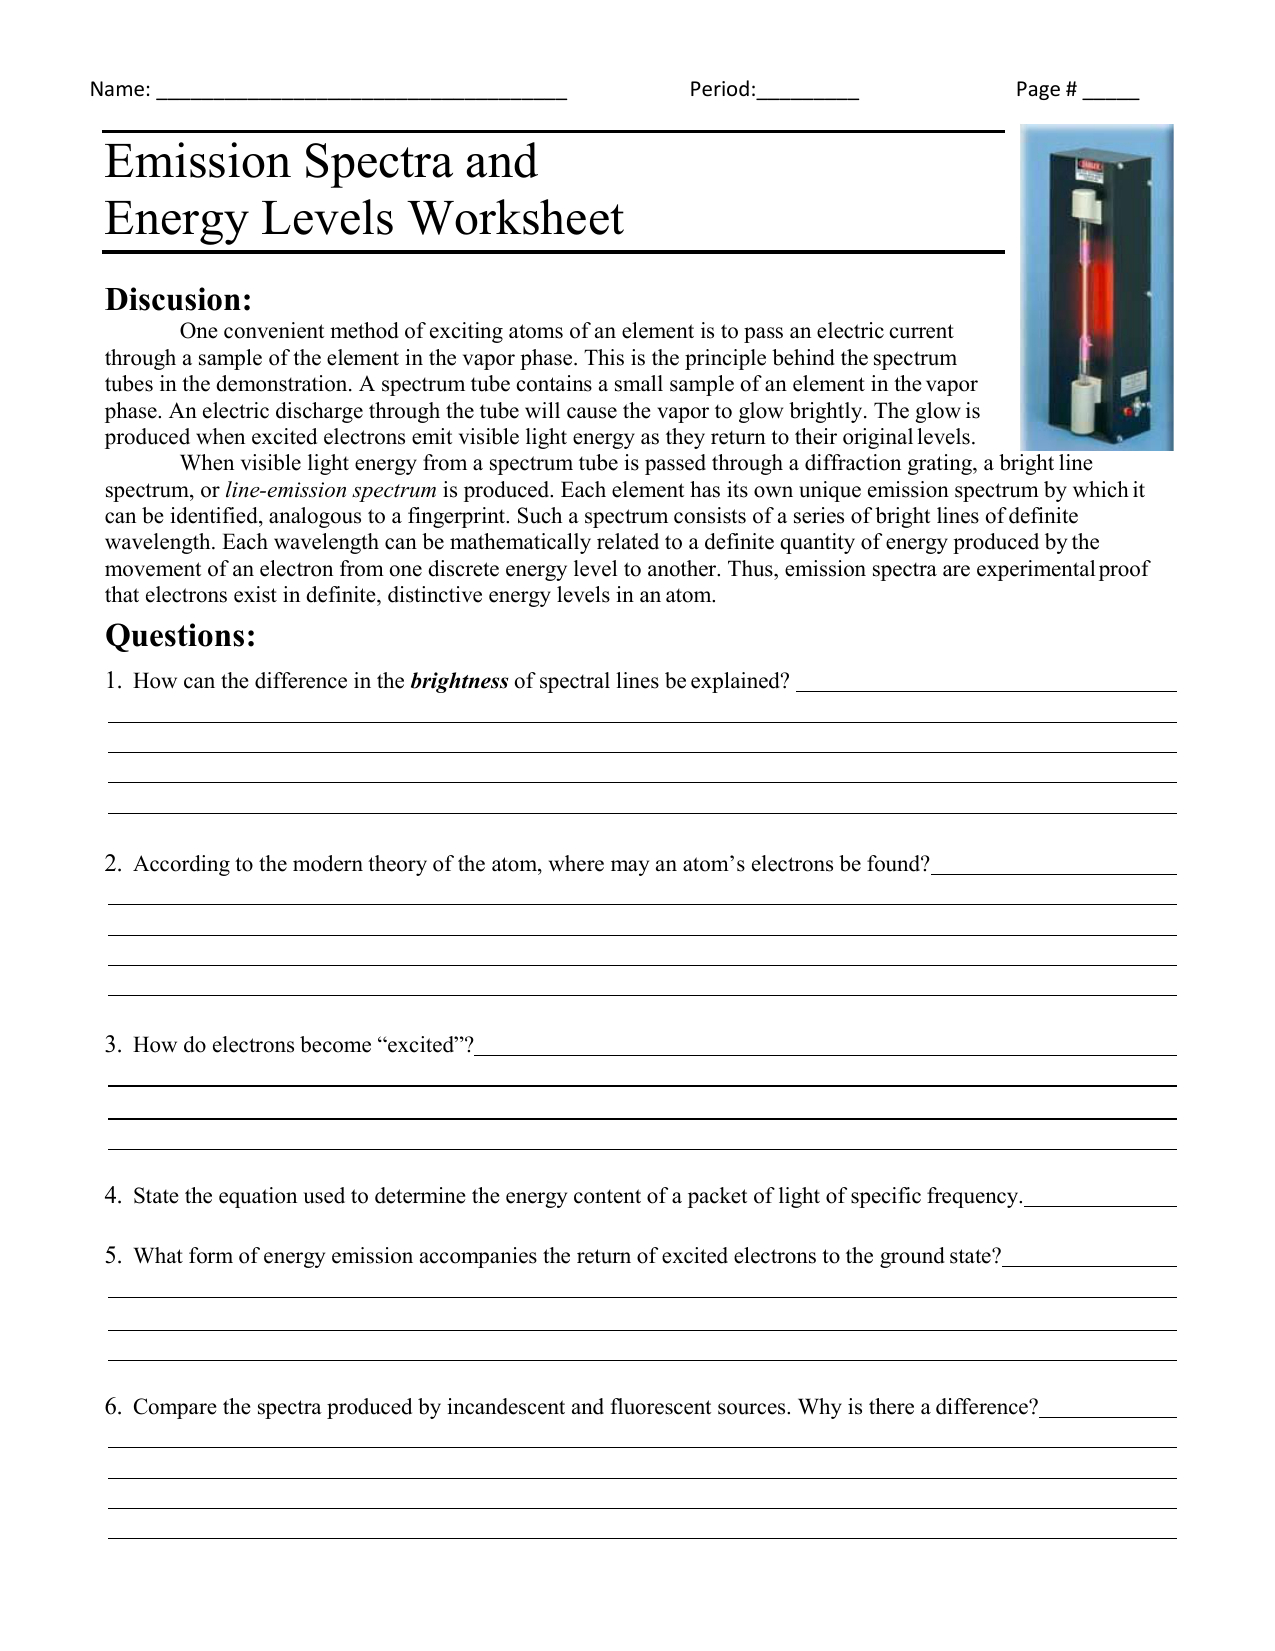 Emission Spectra And Energy Levels Worksheet And Emission Spectra And Energy Levels Worksheet Answers